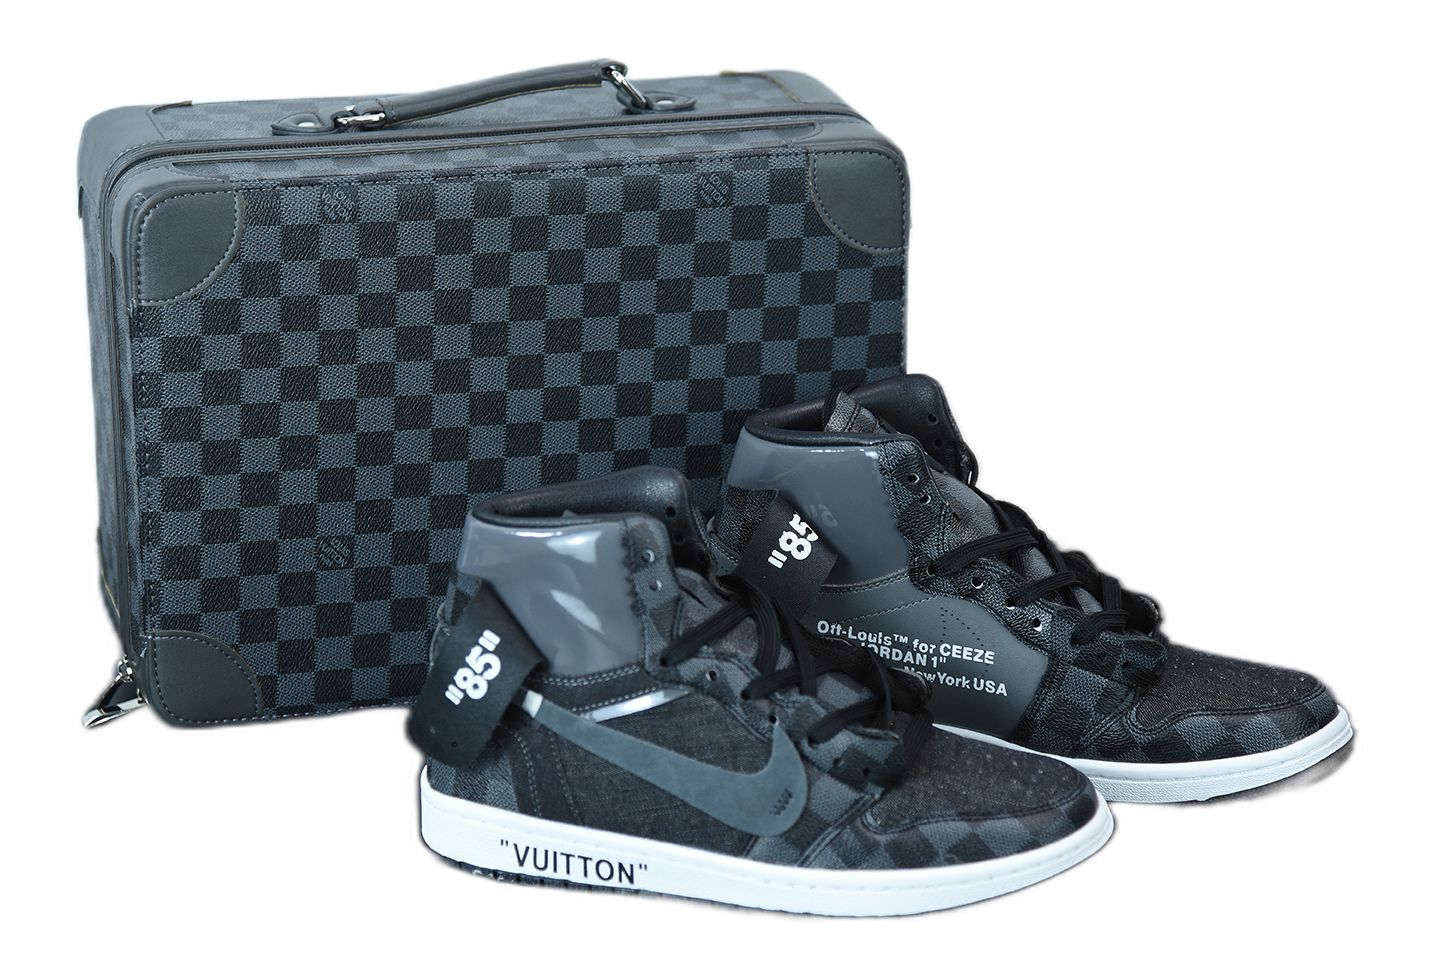 Custom LV Jordan 1s👀 #sneakers #sneakerhead #luisvuitton #jordan1 #fo, Jordan 1 Shoes